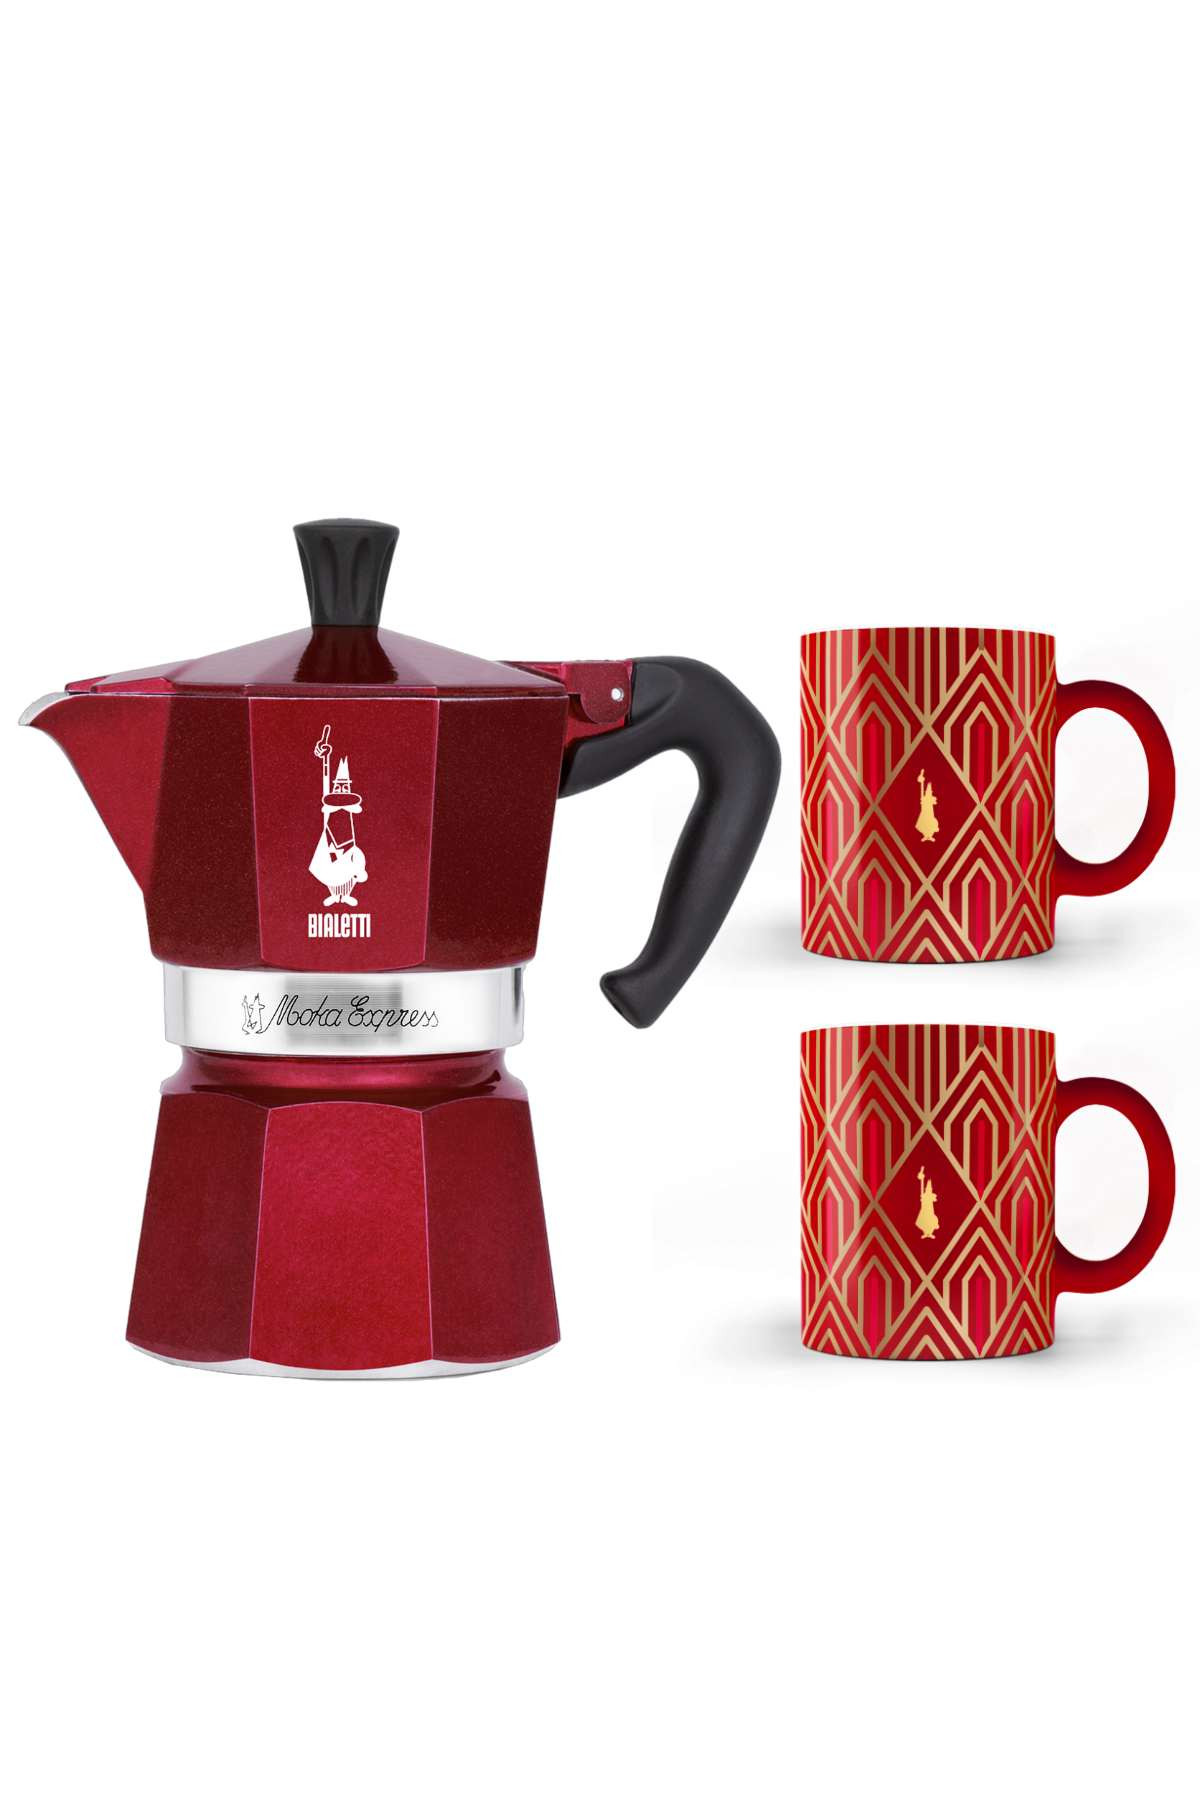 https://media.heirol.fi/589910/1200/espresso-pan-6-cups-moka-express-2-mugs-deco-glamour_.jpg